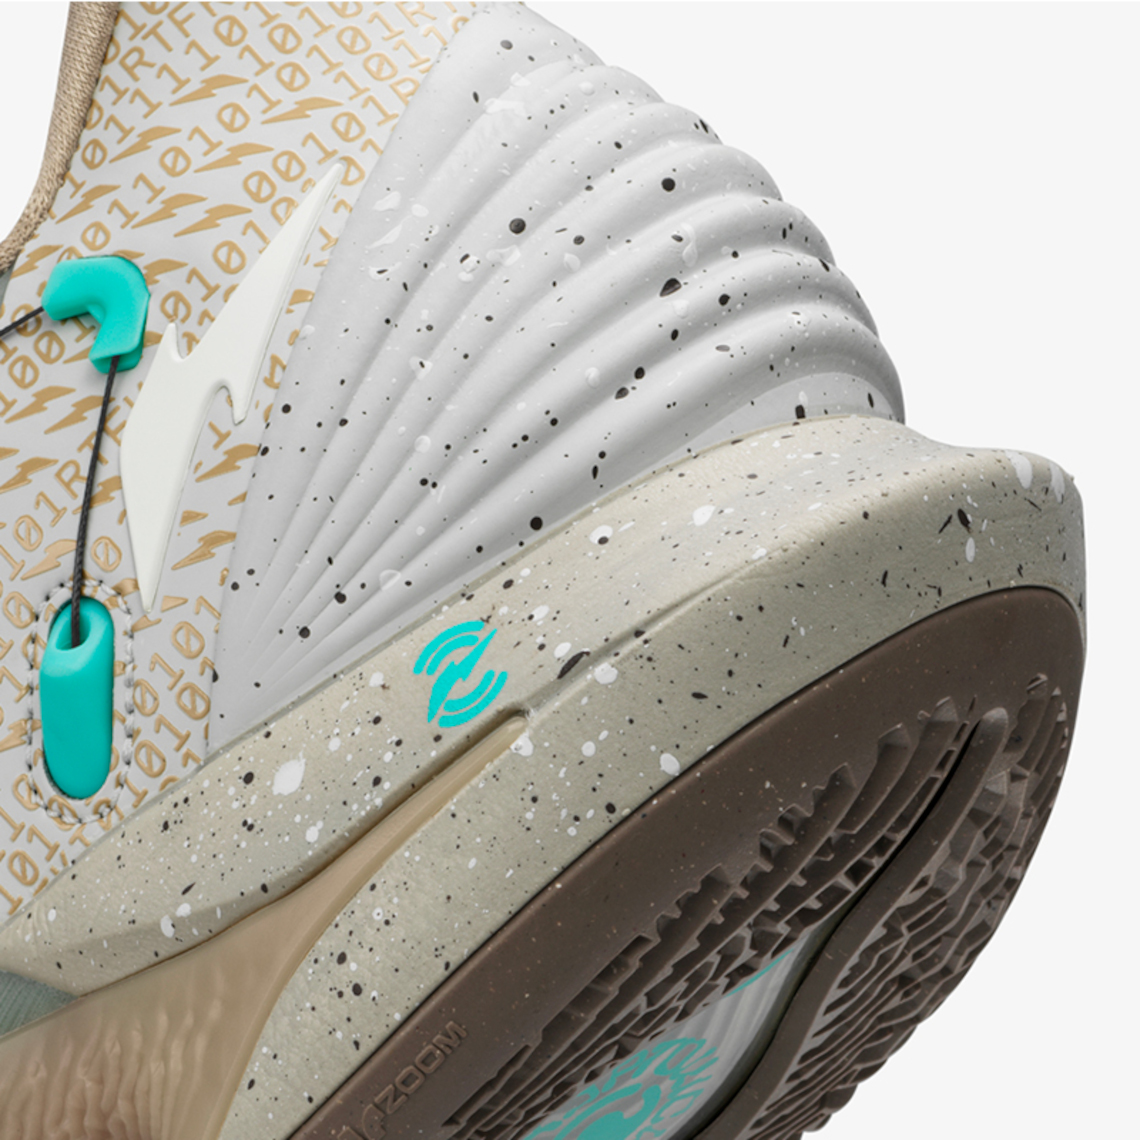 Nike's RTFKT Reveals its Real-life CryptoKick Sneakers